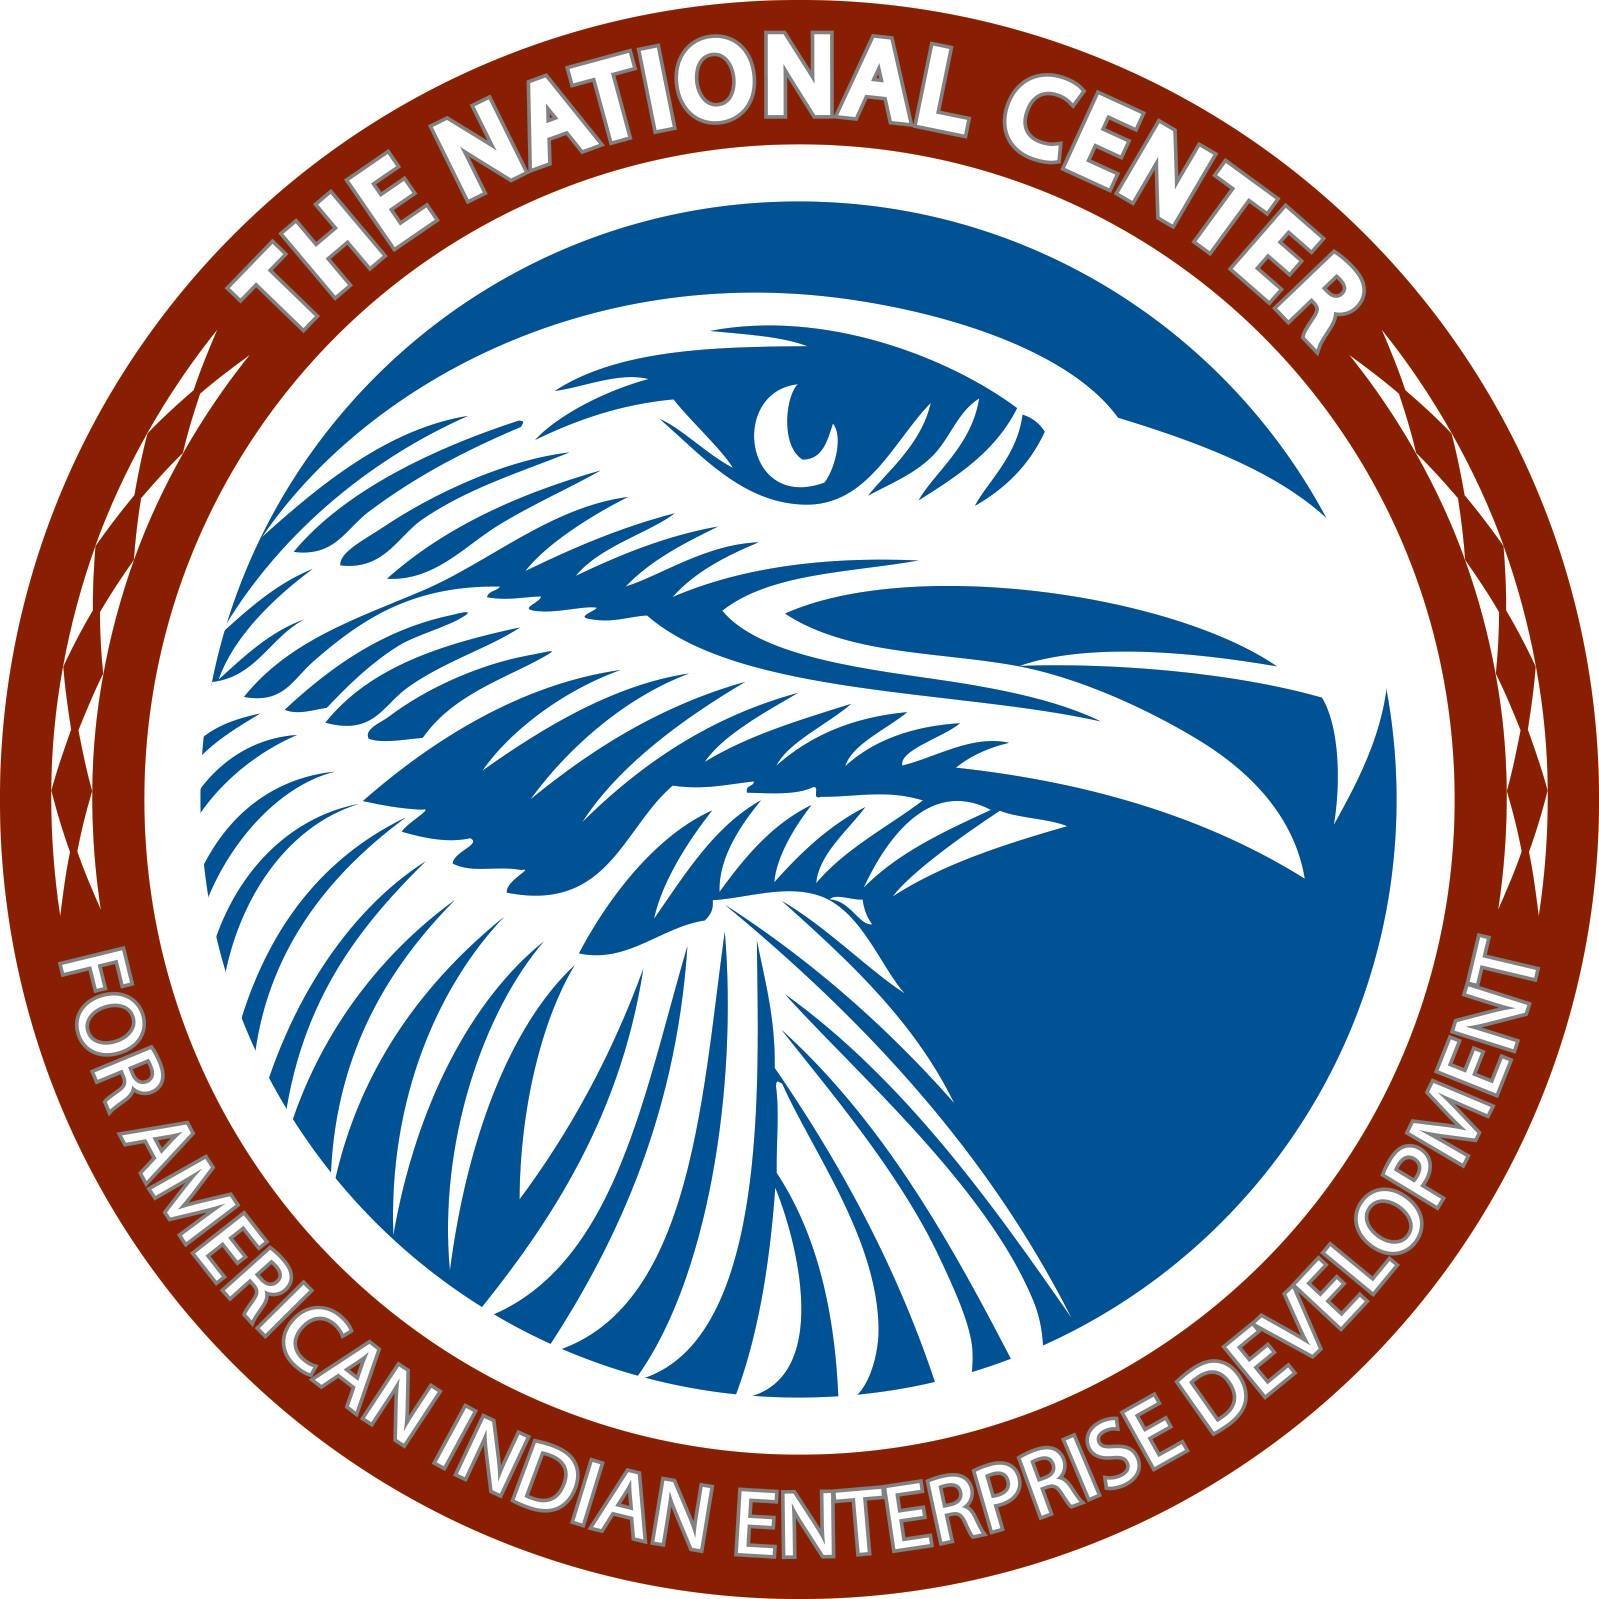 Native American Organizations in Phoenix Arizona - National Center for American Indian Enterprise Development